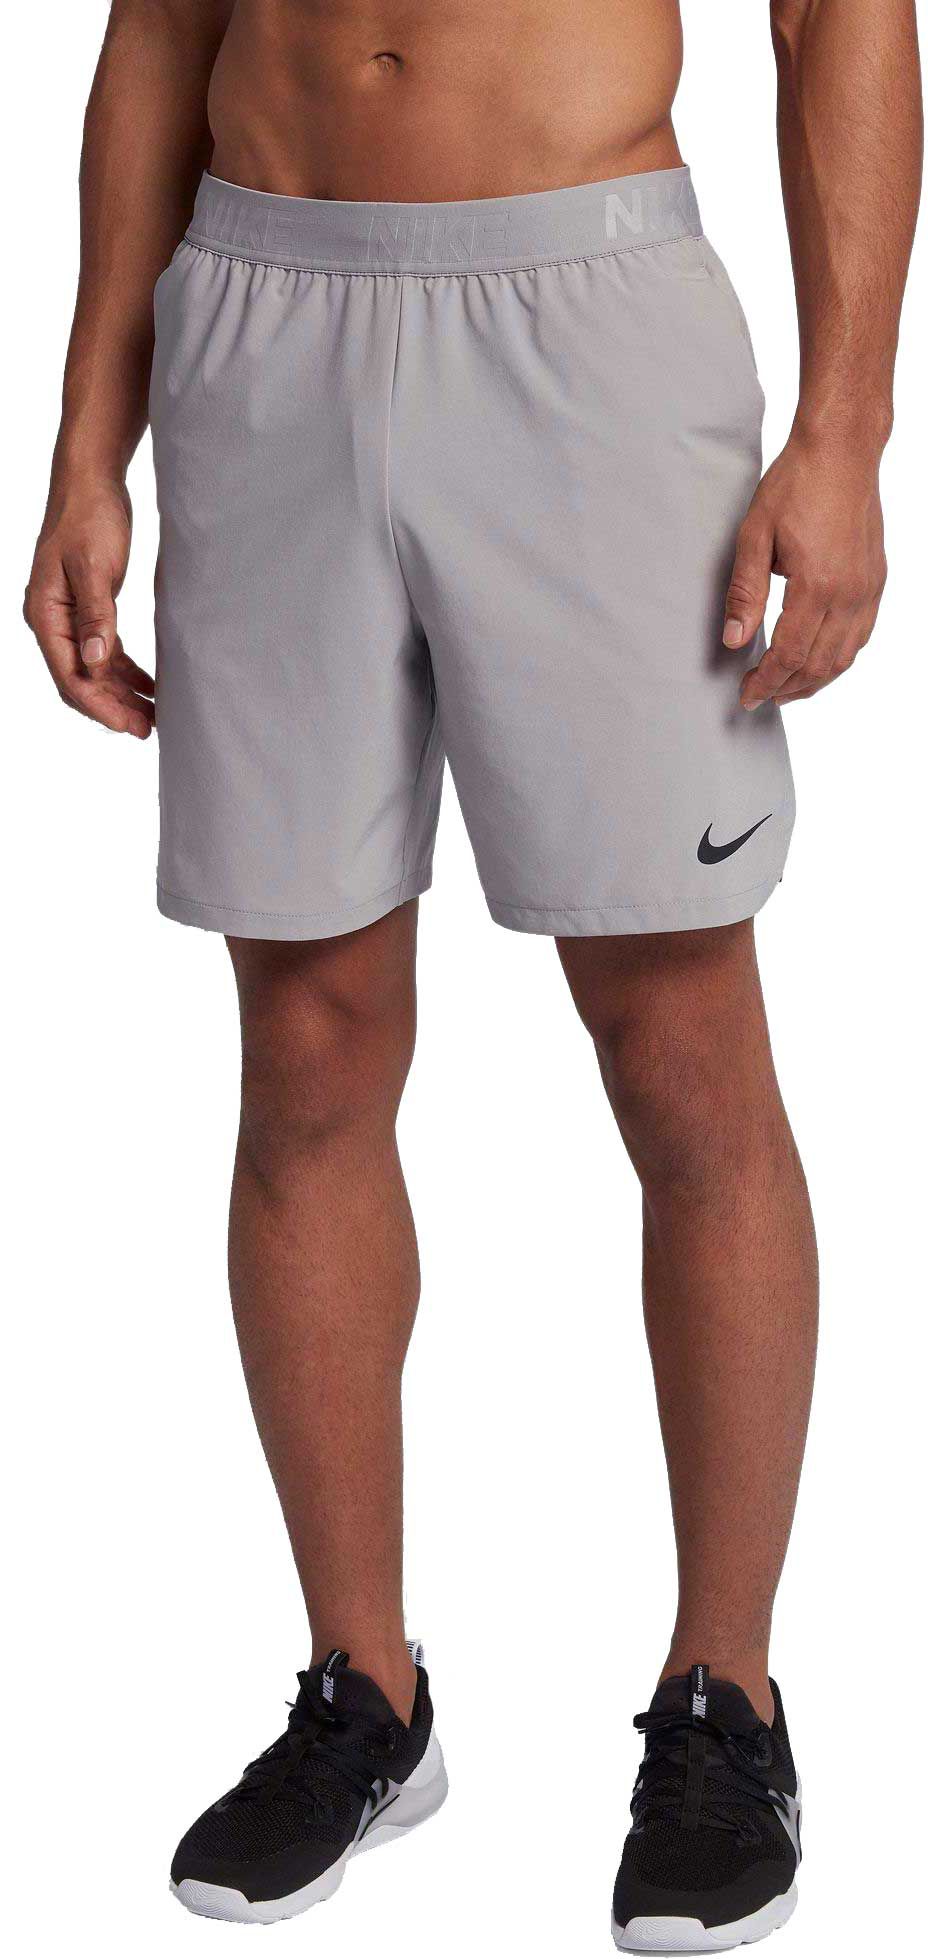 nike 8 inch shorts